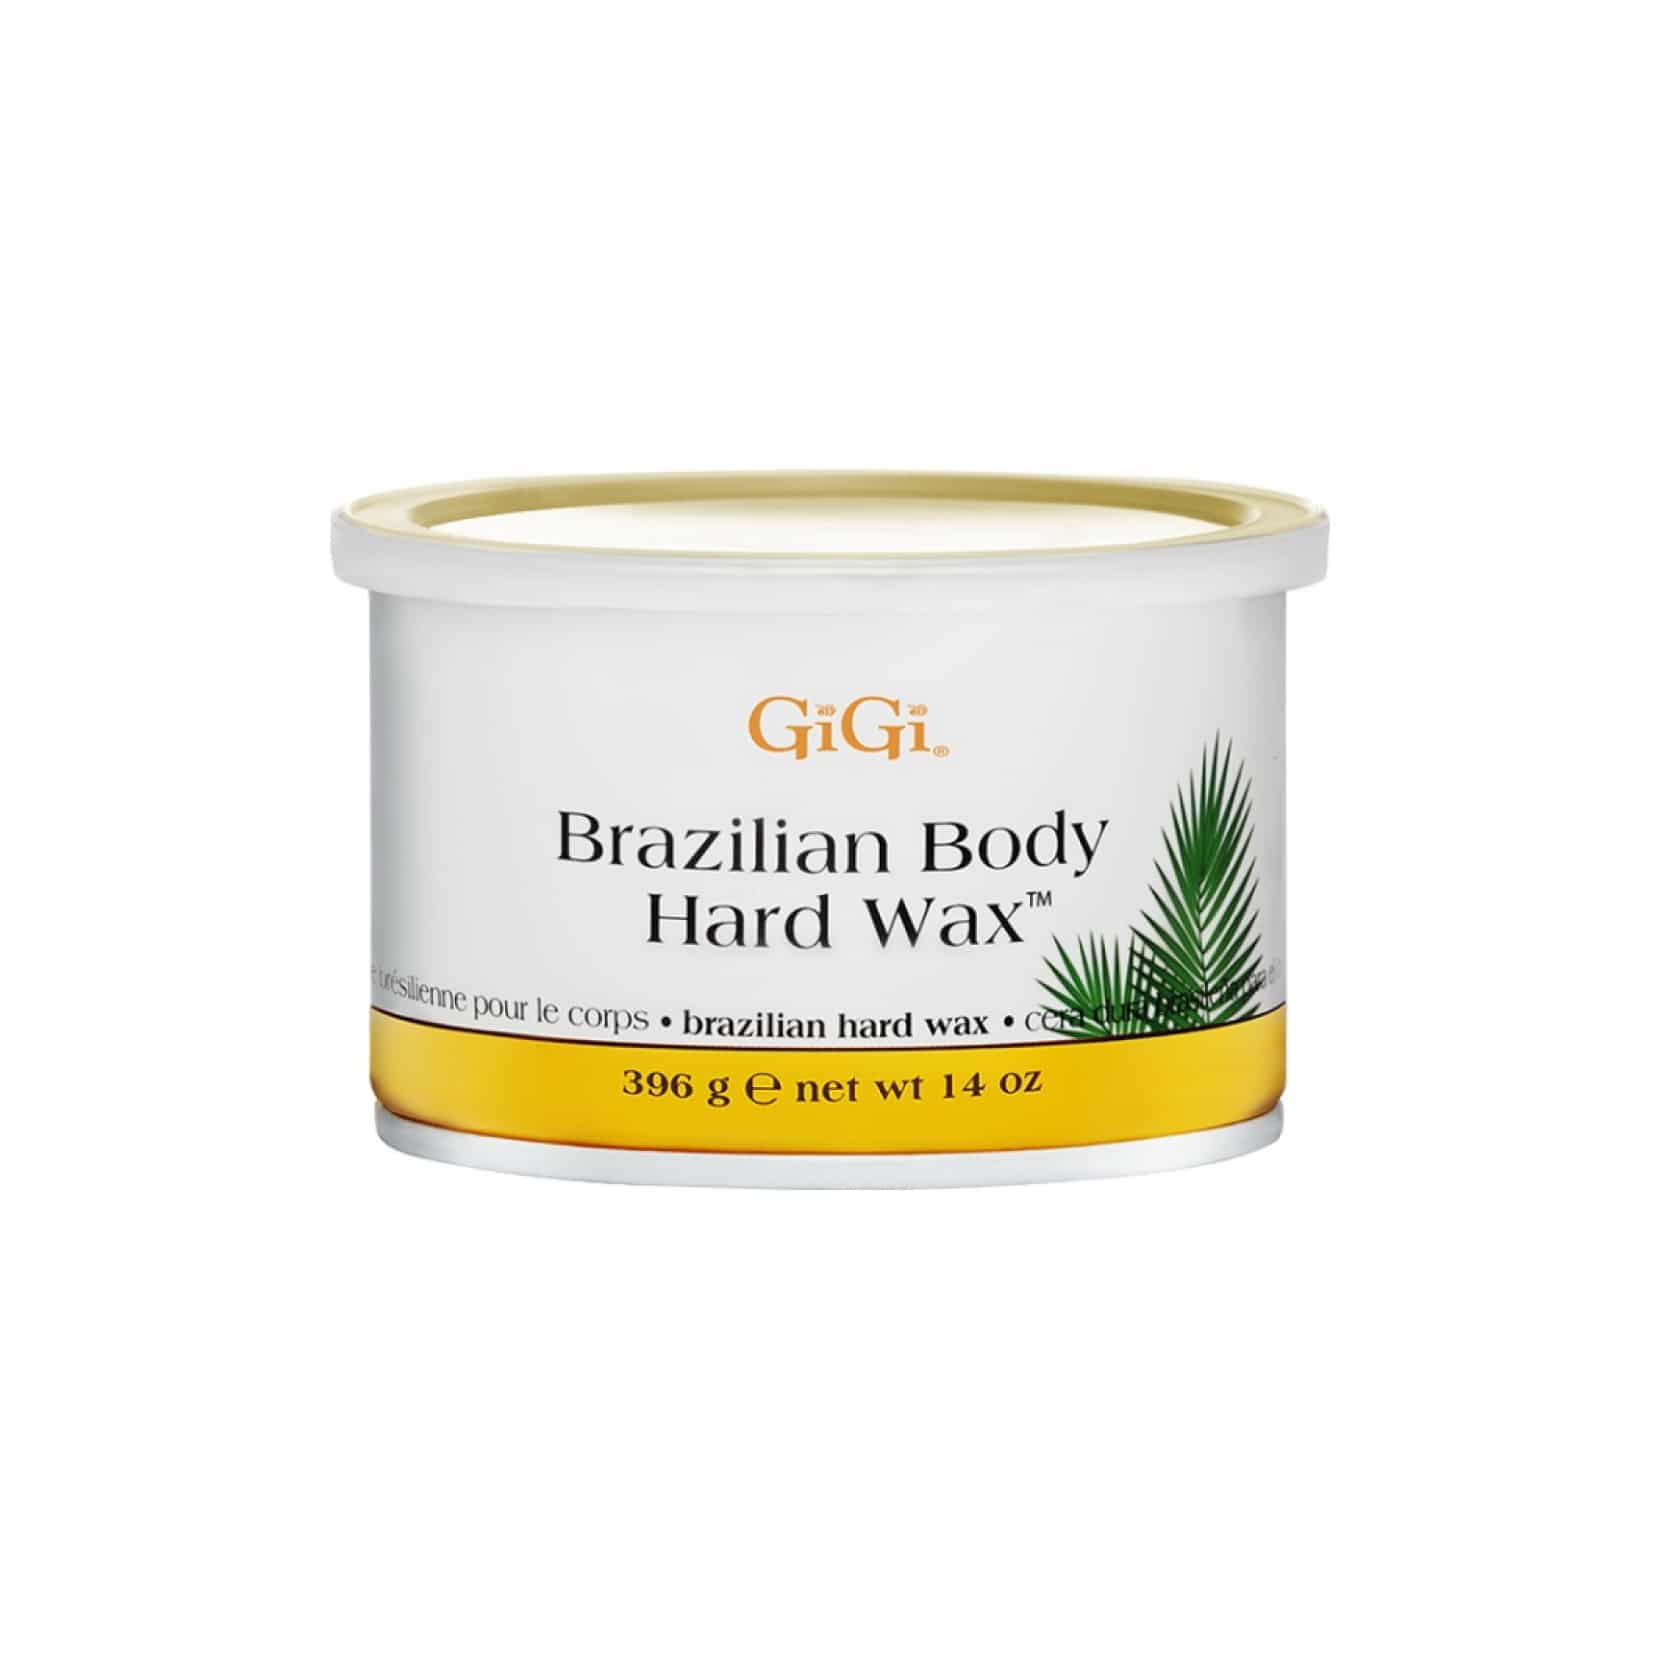 https://www.barberdepots.com/wp-content/uploads/2016/07/GG_0899_Brazilian-Body-Hard-Wax-1000x1000.jpg